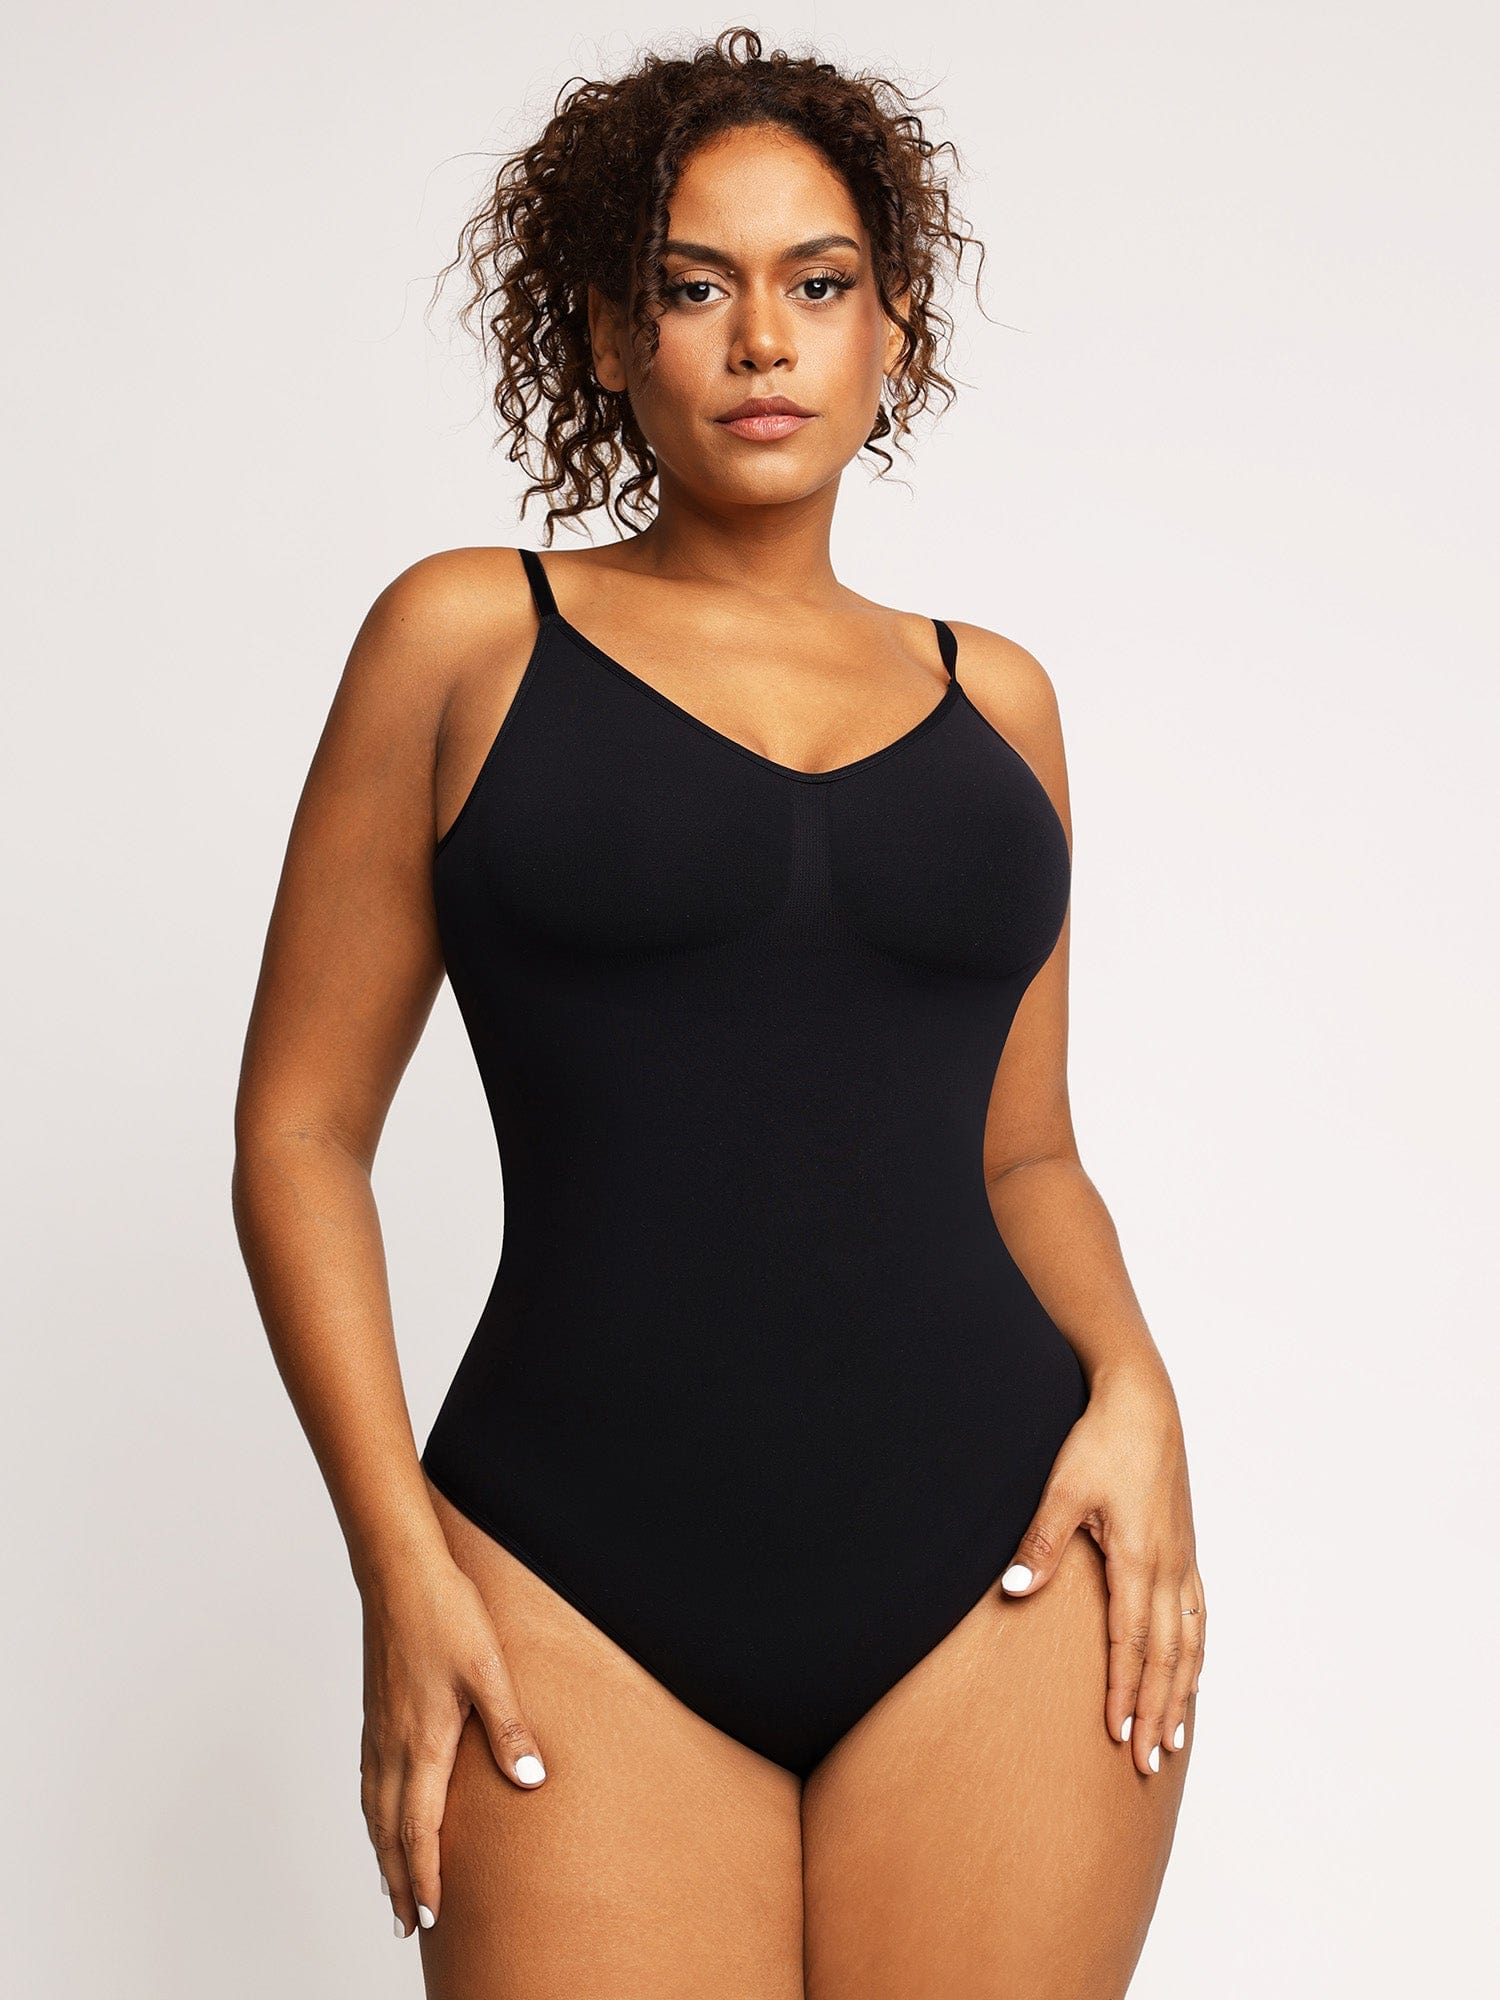 Buy Bodysuit for Women Tummy Control - Shapewear Racerback Top Clothing  Seamless High Neck Body Sculpting Shaper, Black, XL/XXL at